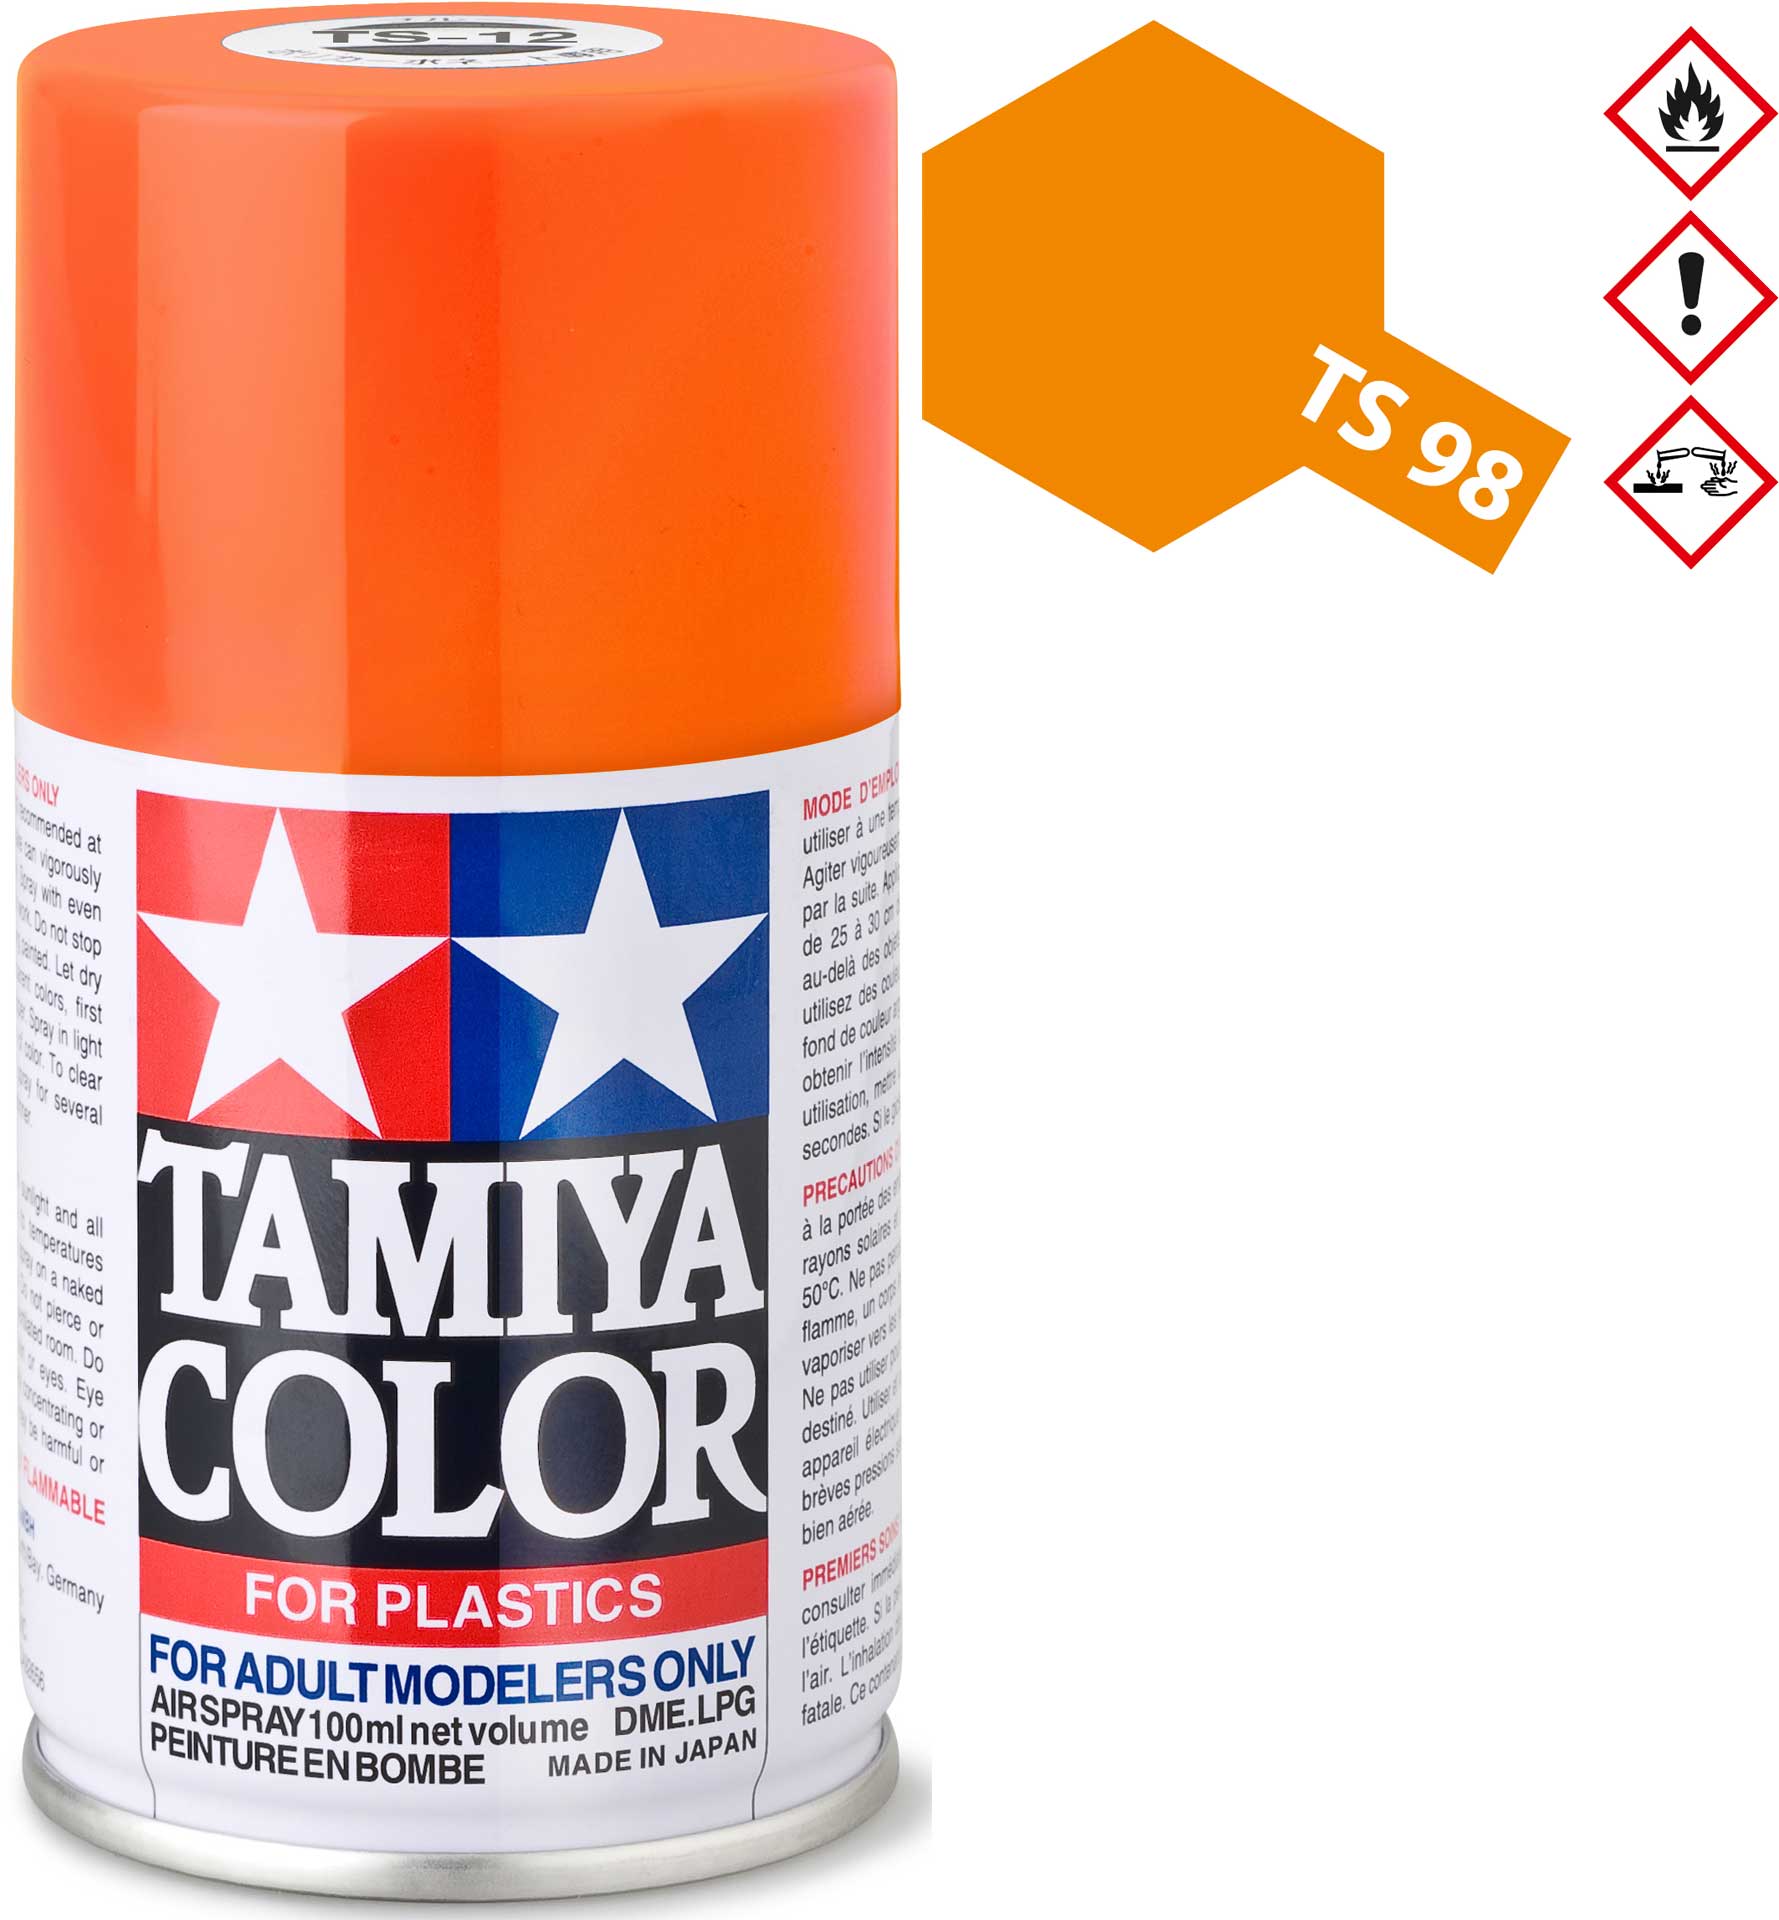 TAMIYA TS-98 Pure-Orange glänzend Kunststoff Spray 100ml